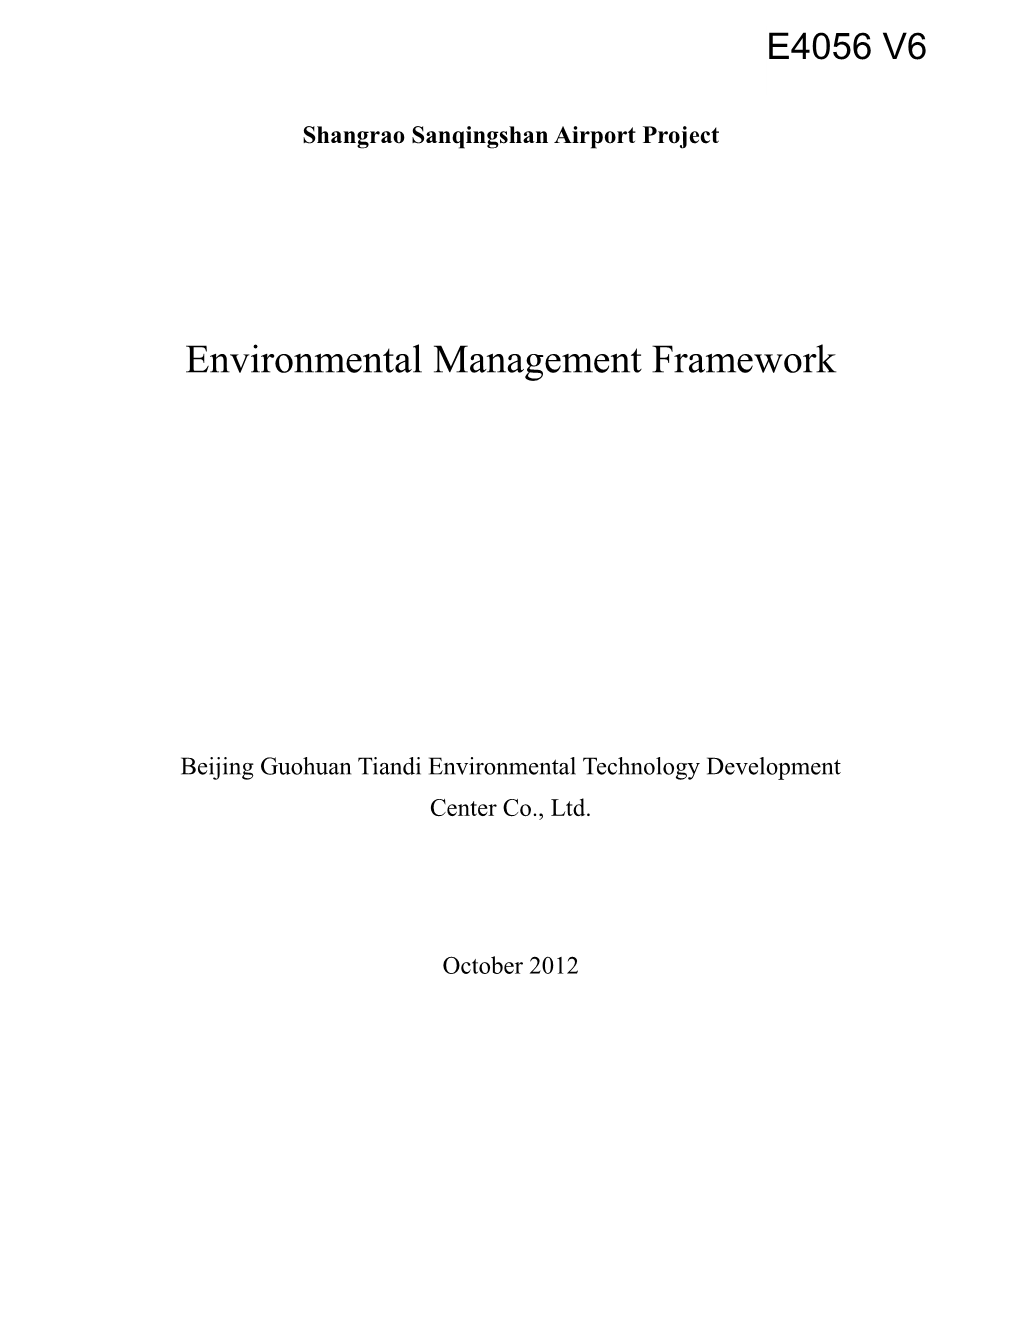 I.Projects Includedin Environmental Management Framework